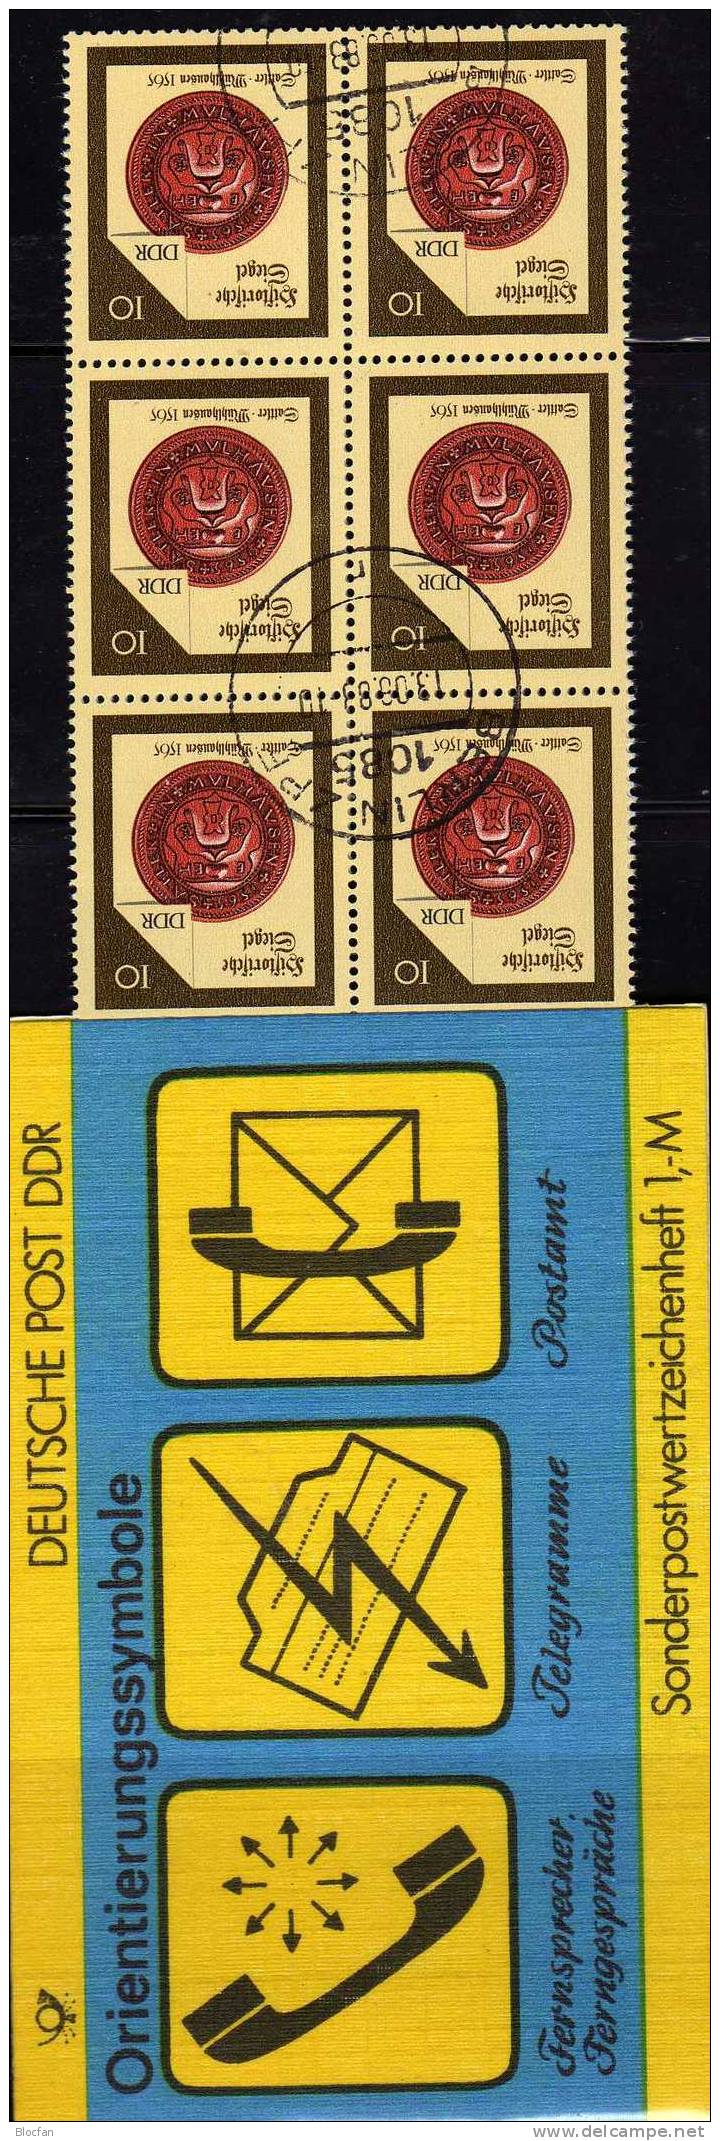 SMH 32 Orientierungs-Sympole Der Post 1987 Telefon Telegramm Fax DDR 10x3156 + SMHD32 O 8€ Mit Siegel Booklet Of Germany - Booklets